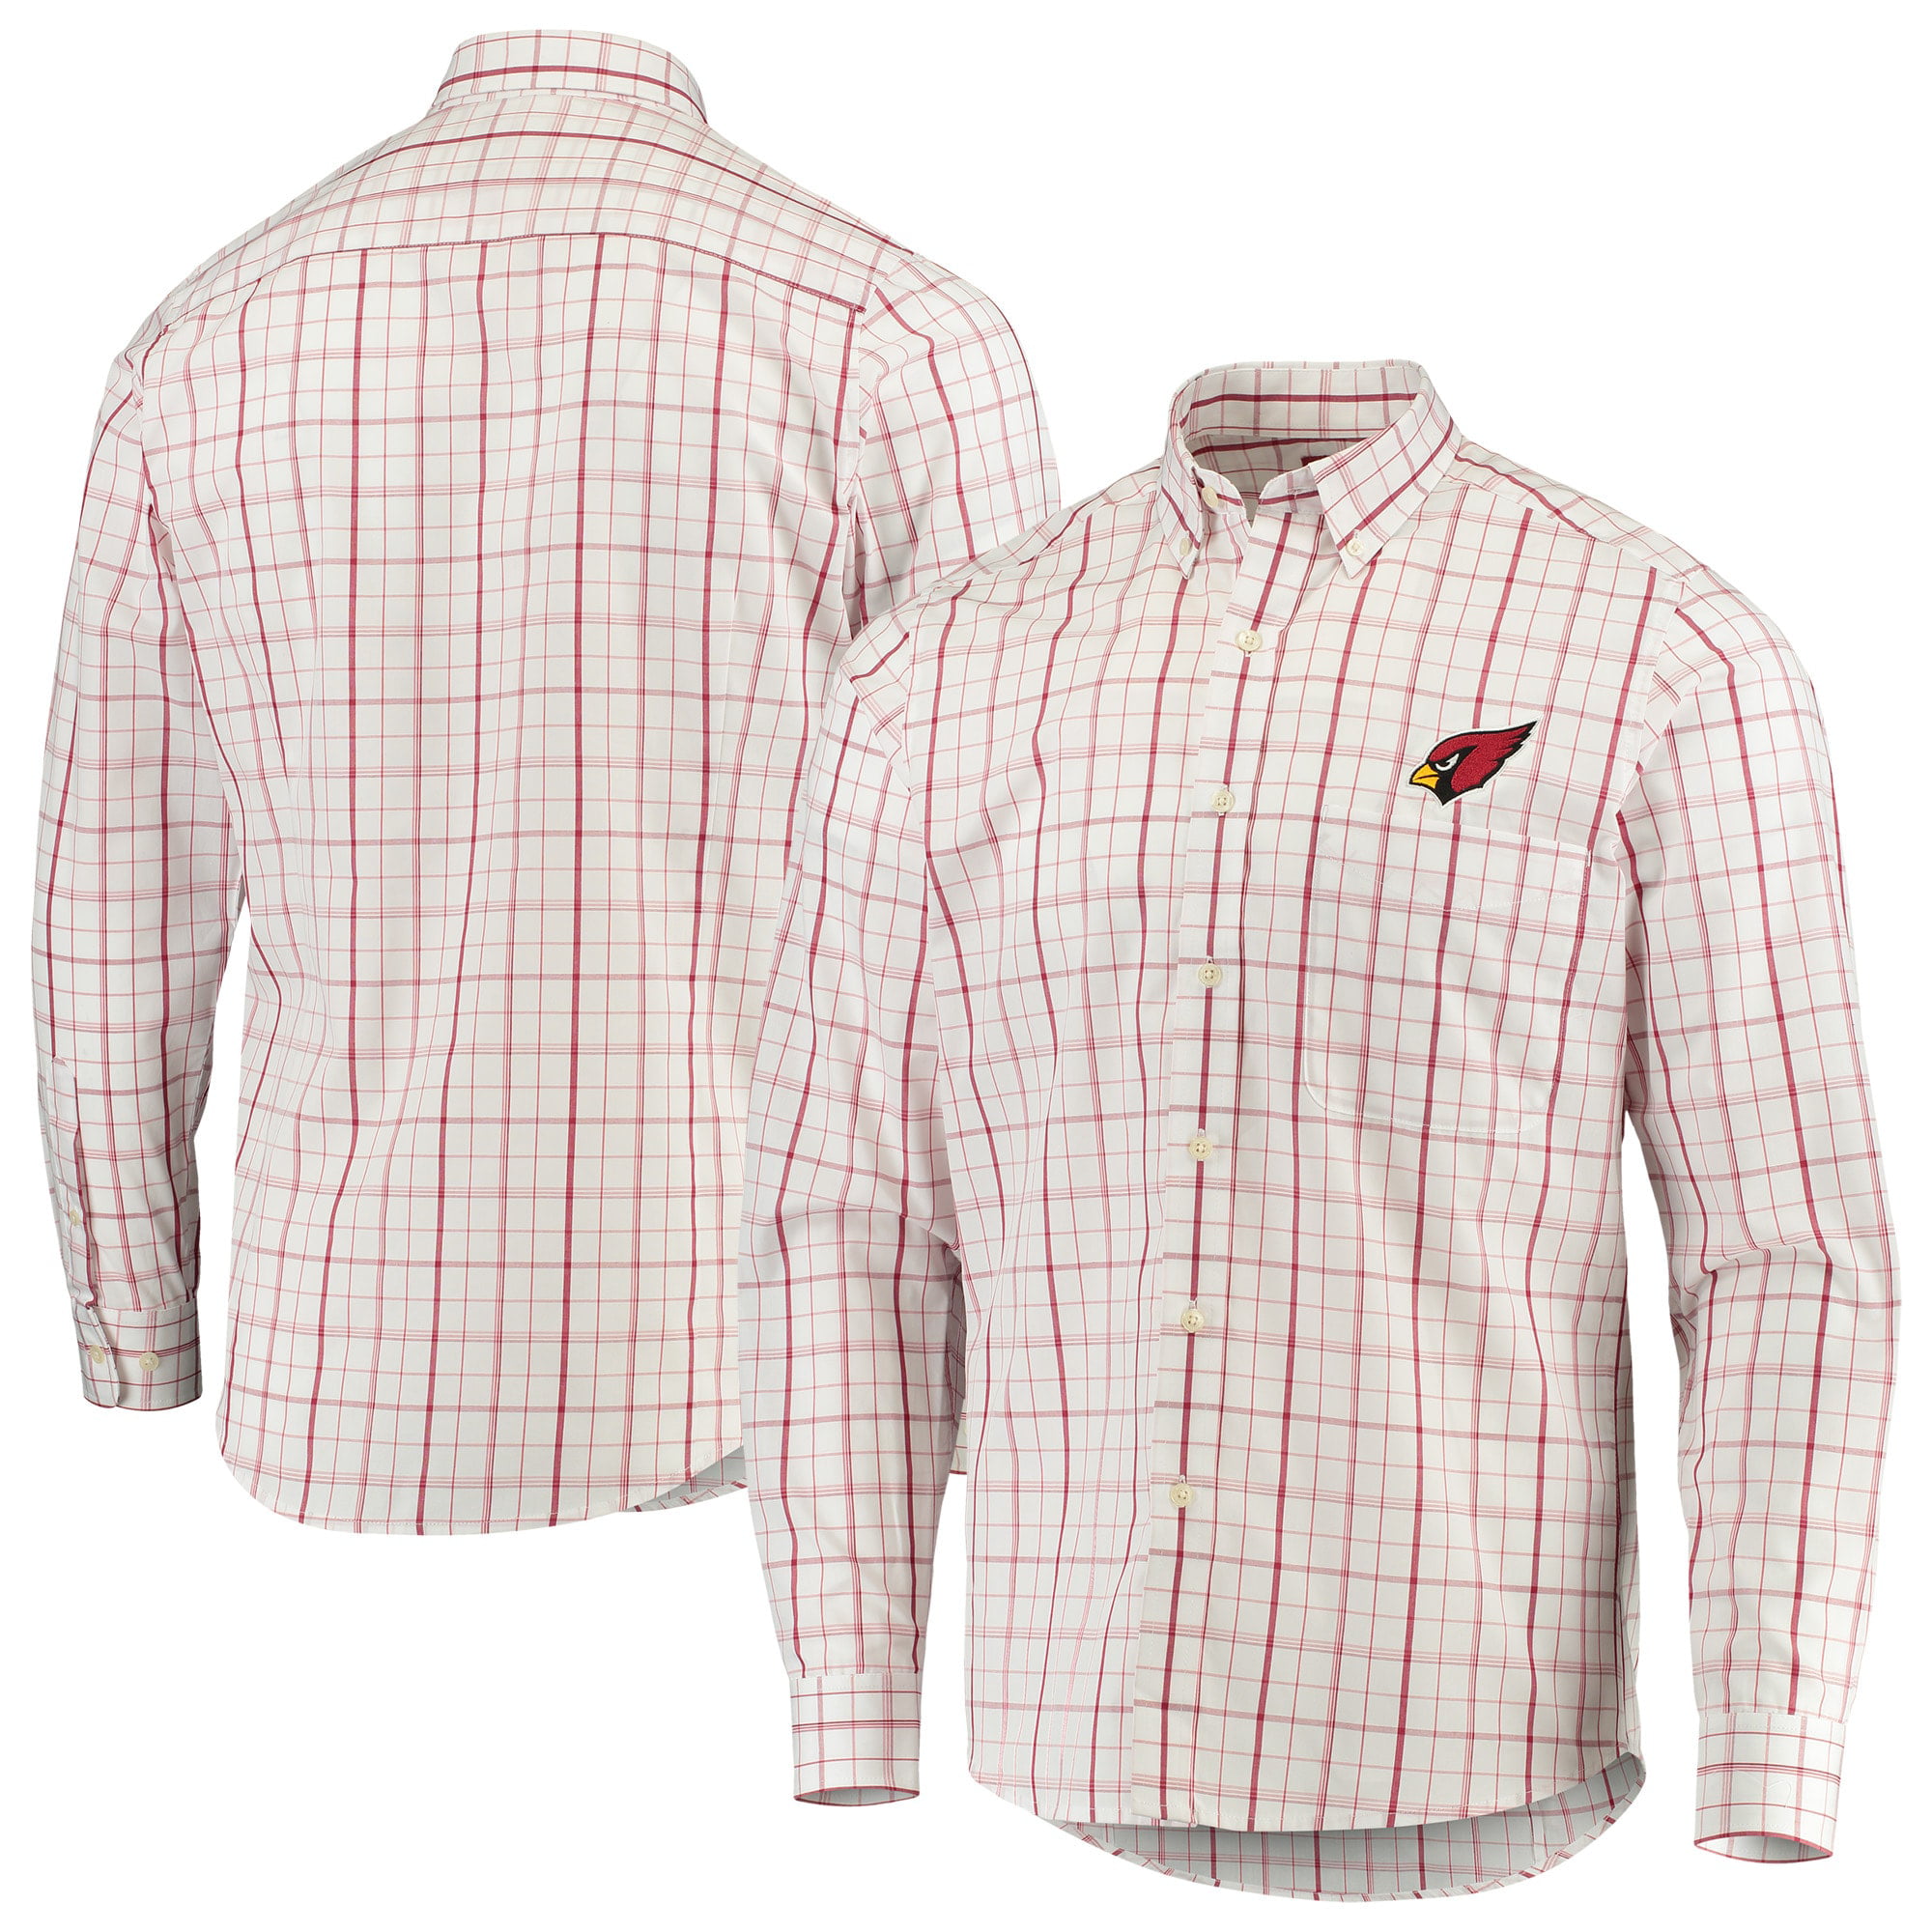 cardinals dress shirt